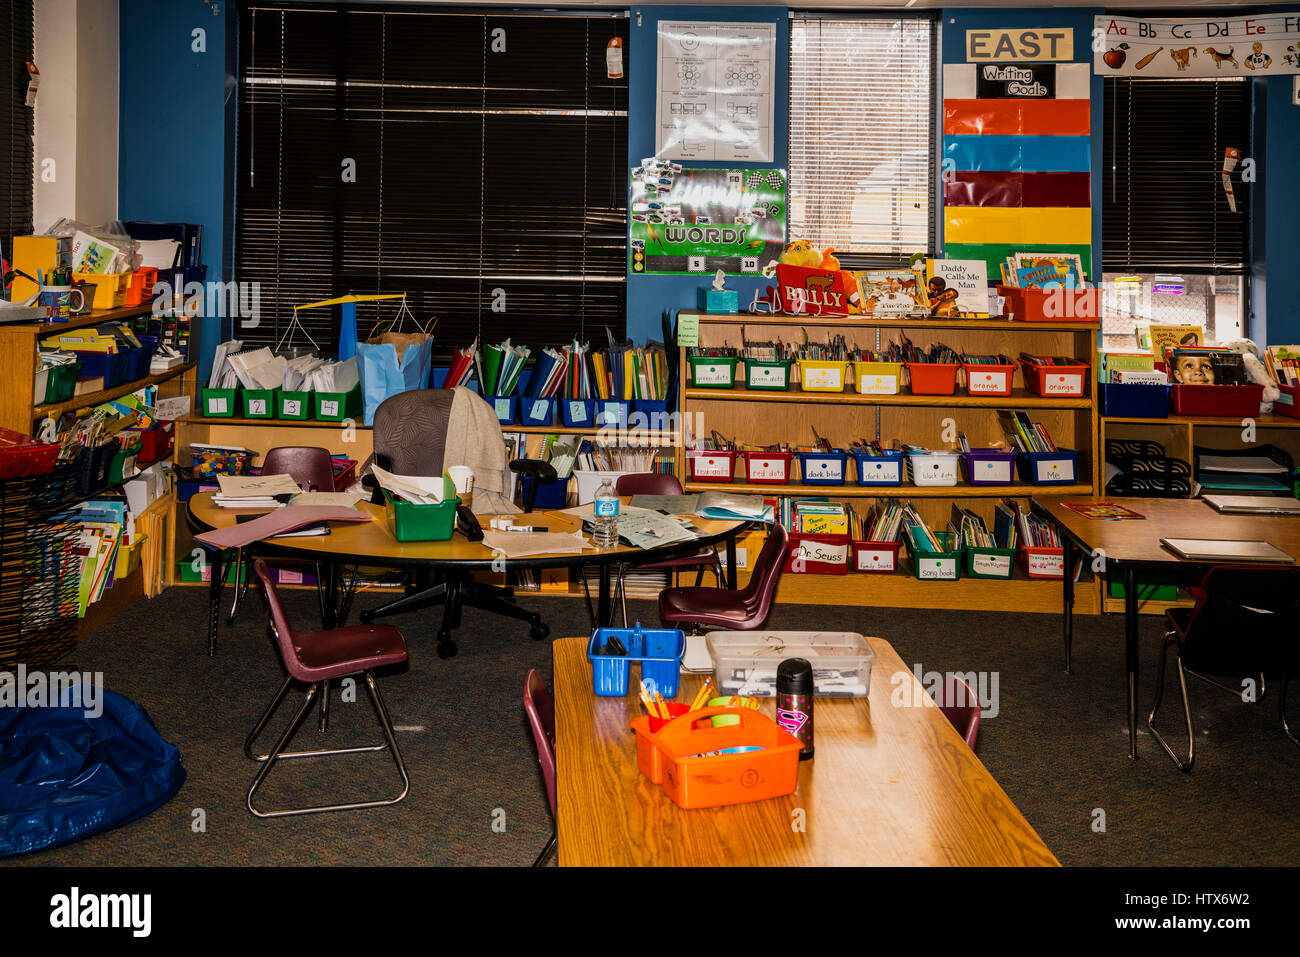 Kindergarten classroom showing teaching aids Stock Photo